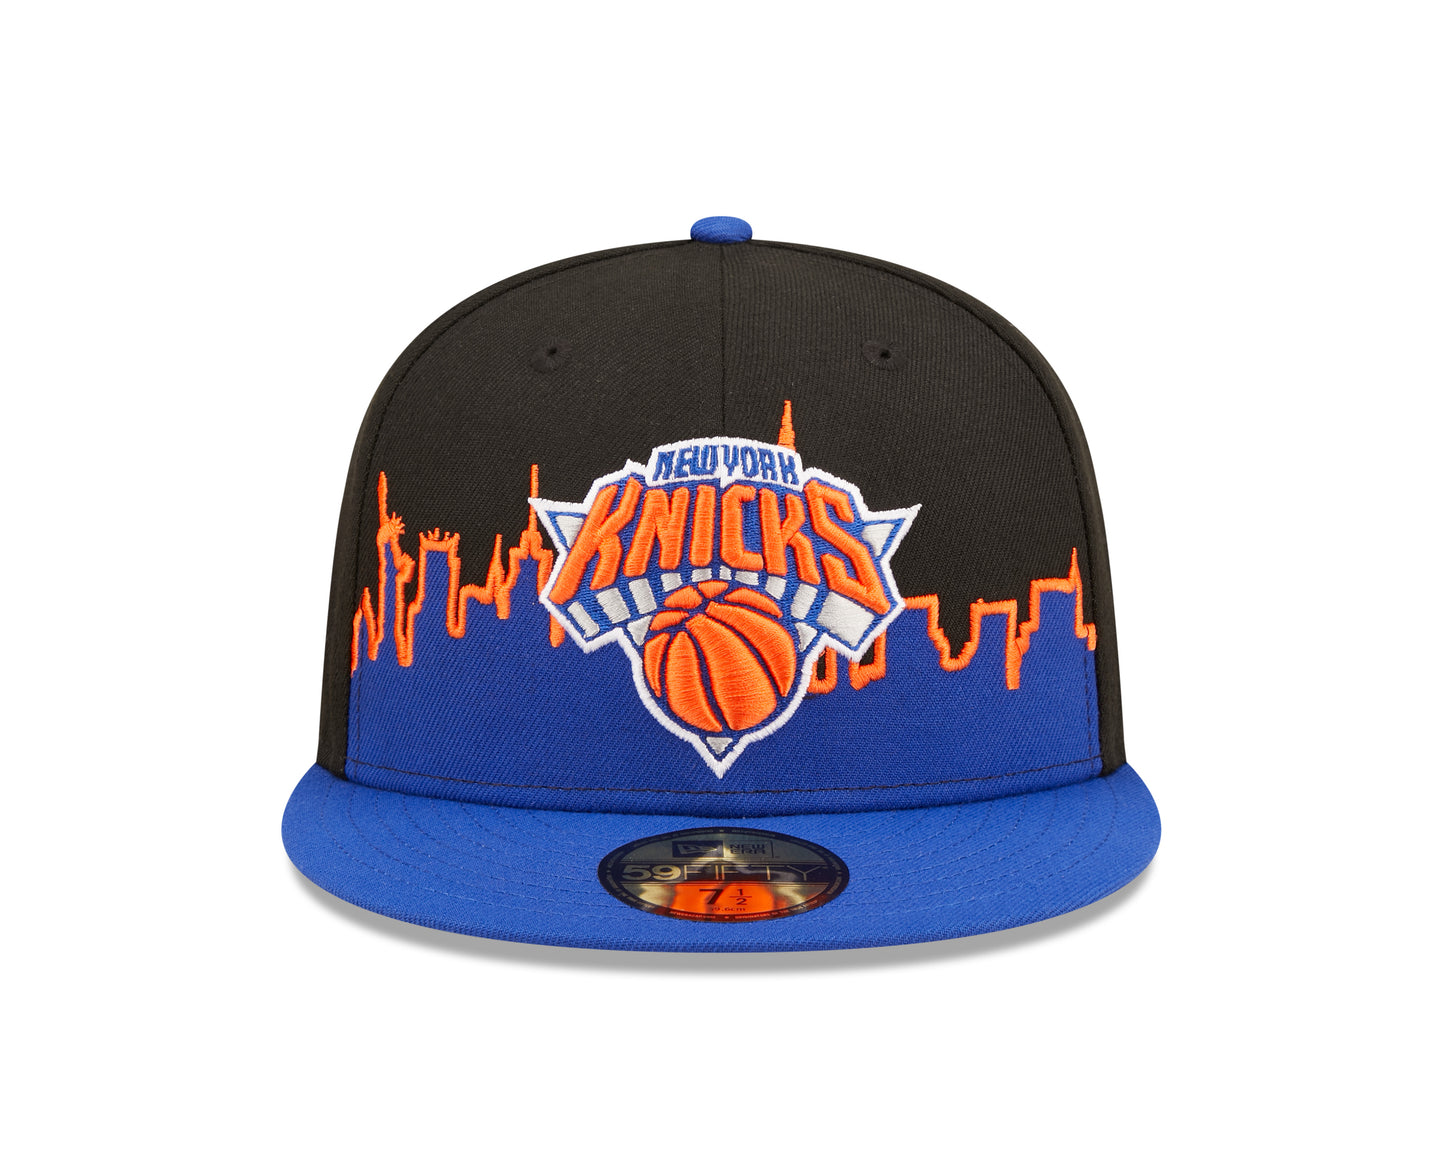 New York Knicks New Era NBA Tip Off 59fifty Hat - Black